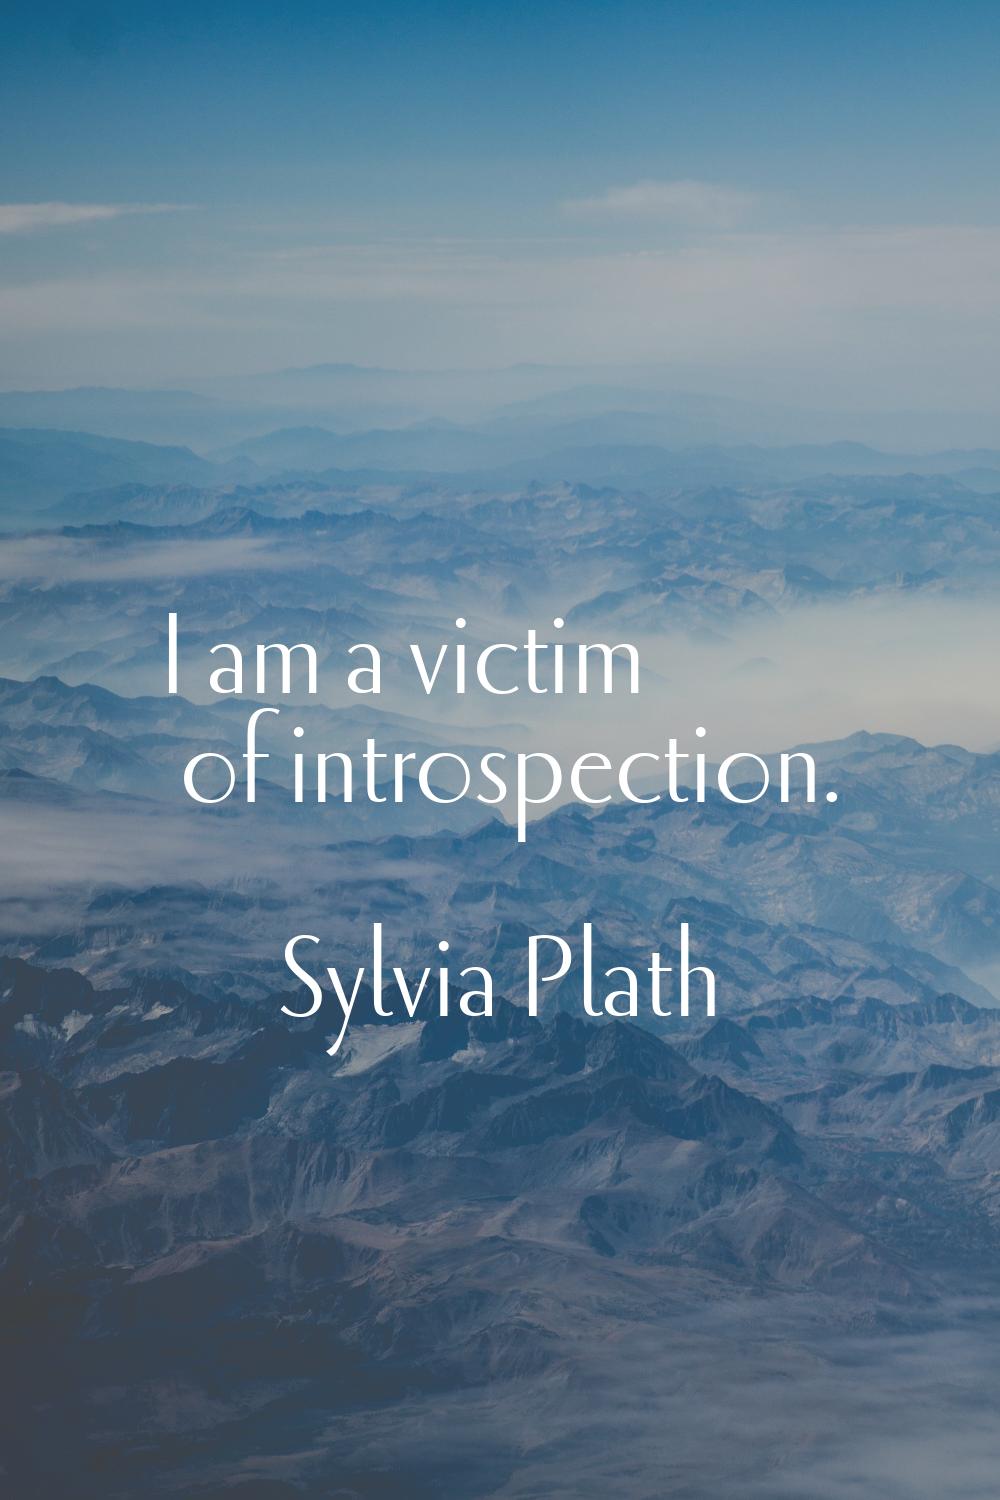 I am a victim of introspection.